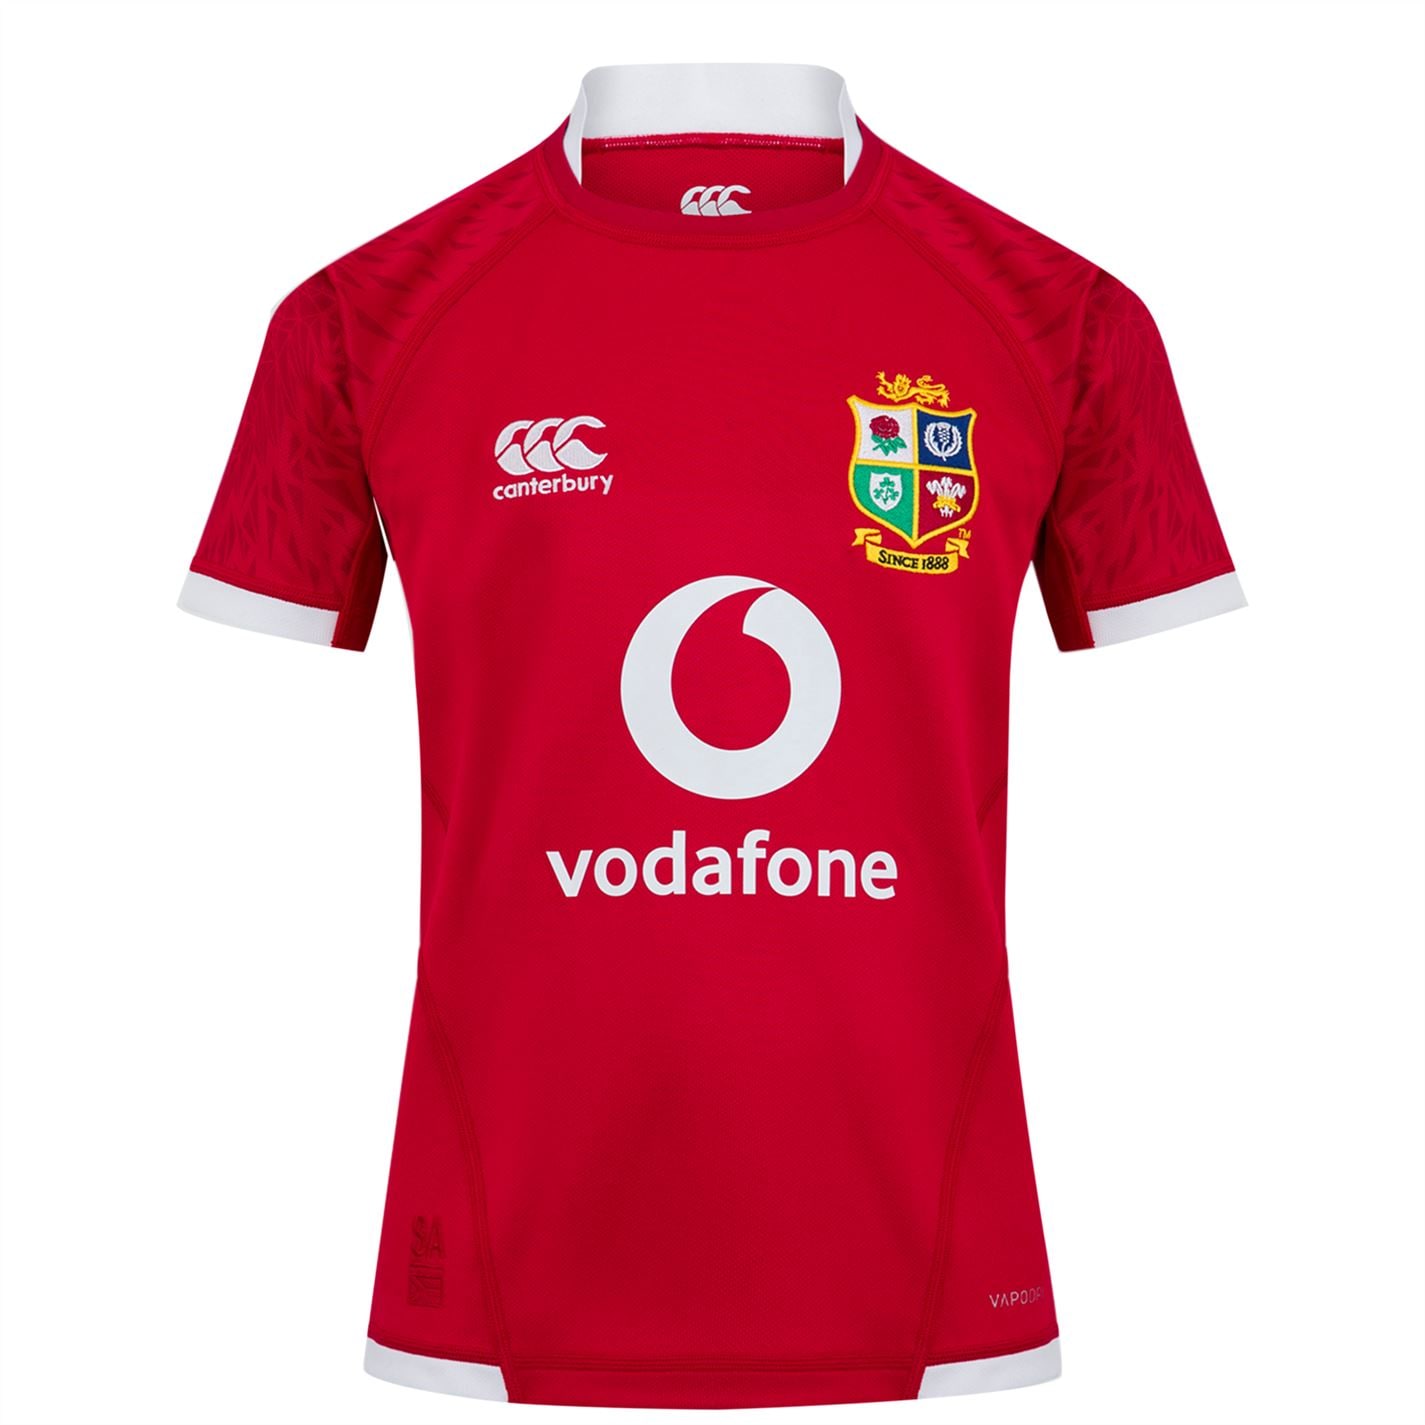 Canterbury British and Irish Lions Pro Shirt 2021 pentru copii rosu